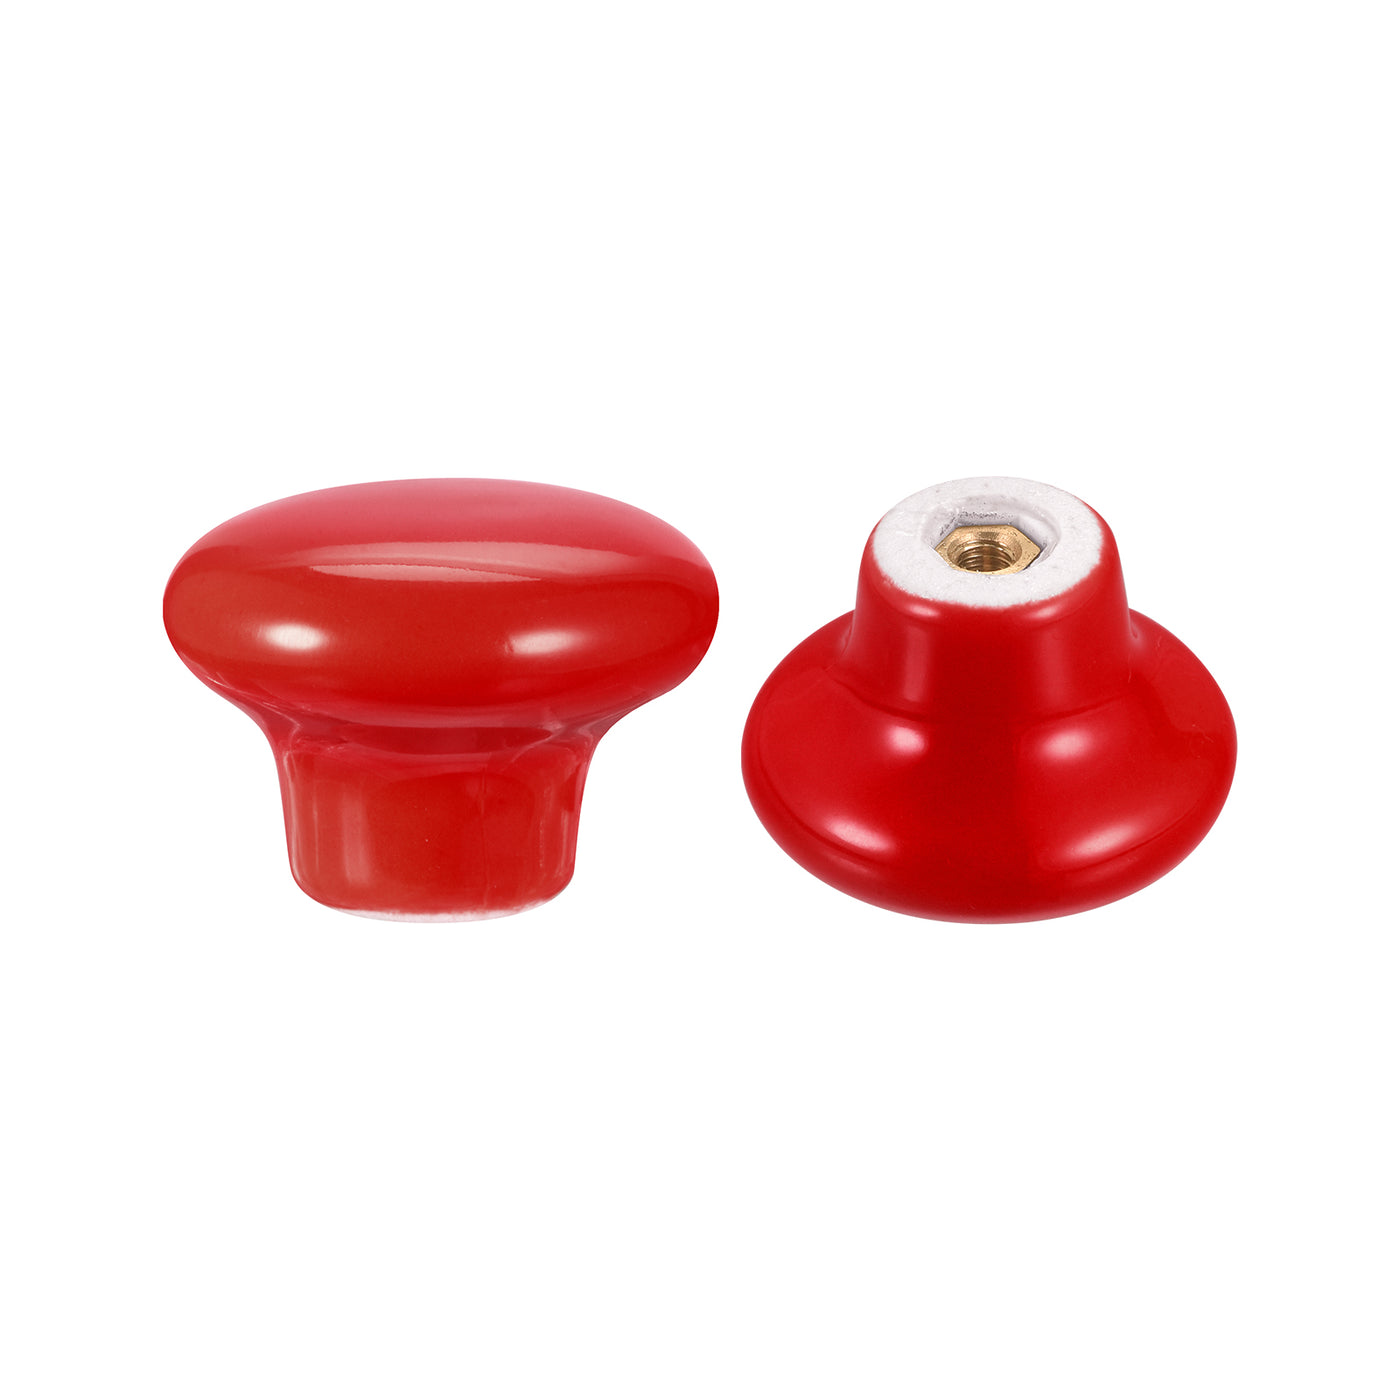 uxcell Uxcell Ceramic Drawer Knobs 15pcs Mushroom Shape Pulls 0.94"x1.26" for Dresser(Red)